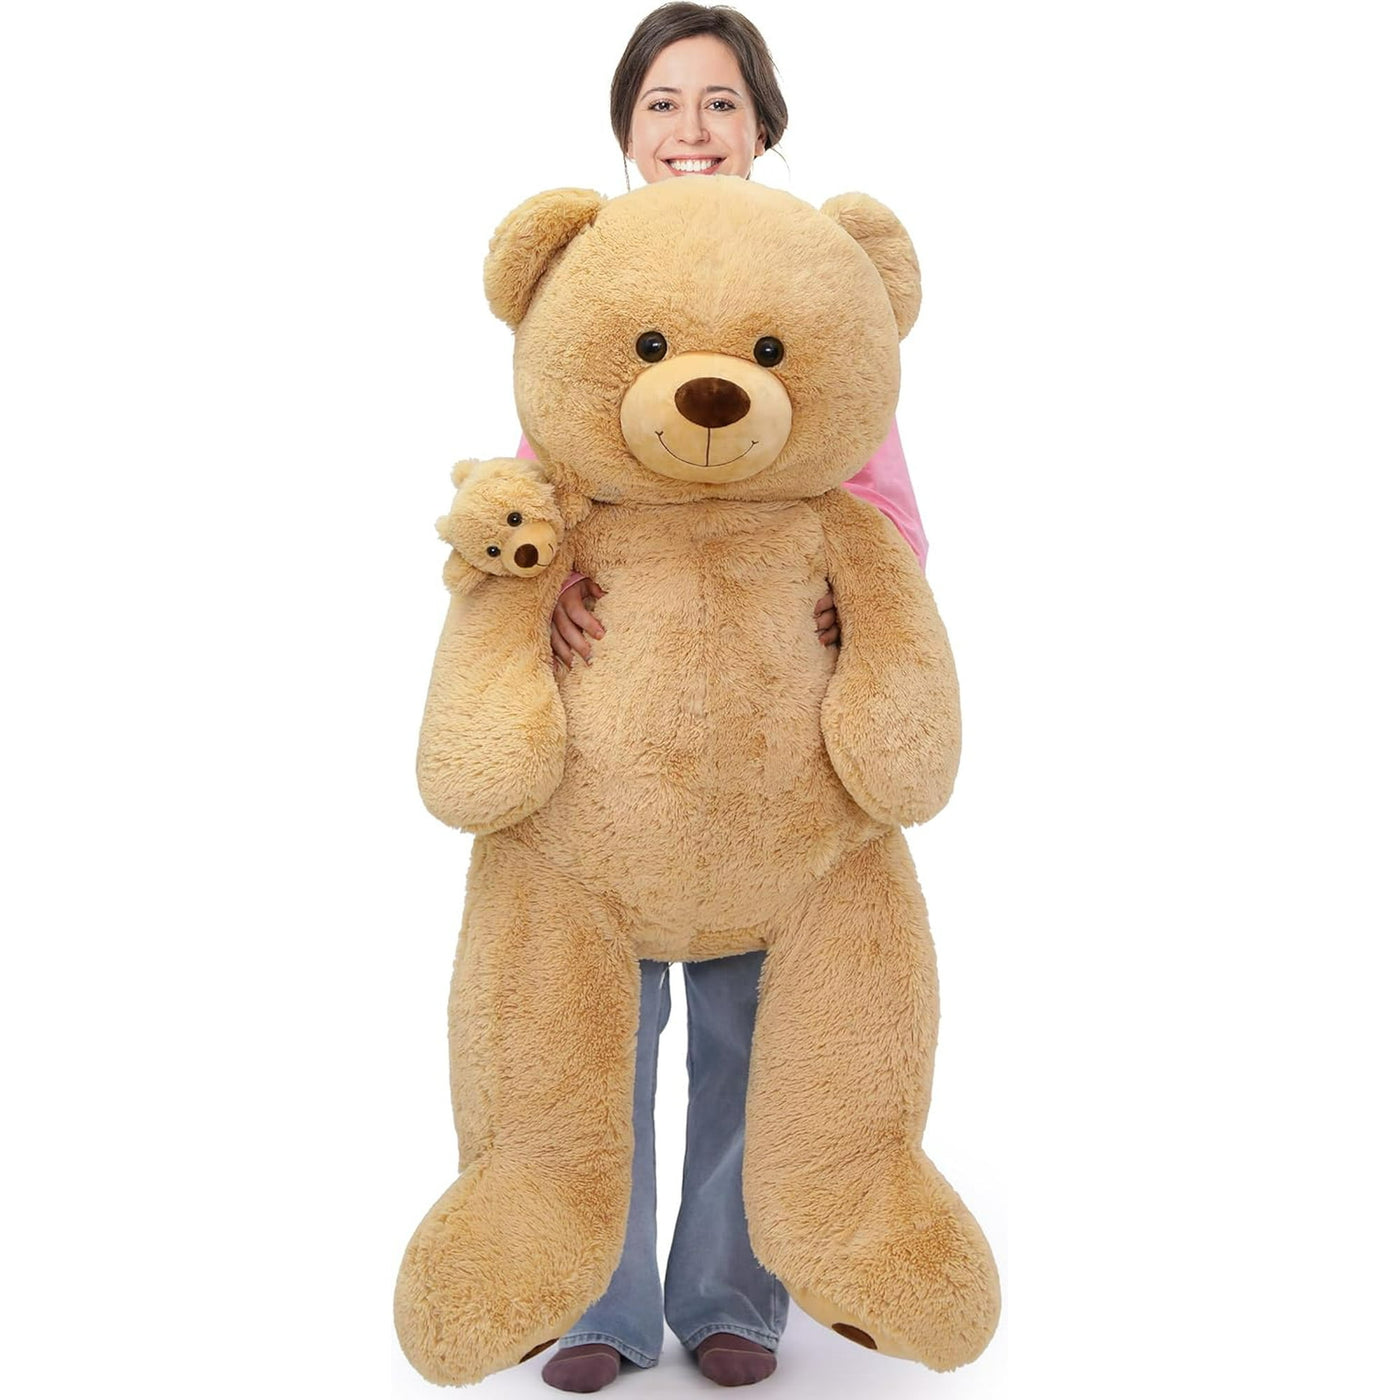 MorisMos Giant Plush Teddy Bear Stuffed Animals 4.3ft Soft Hug Big Teddy Bear, Mommy and Baby